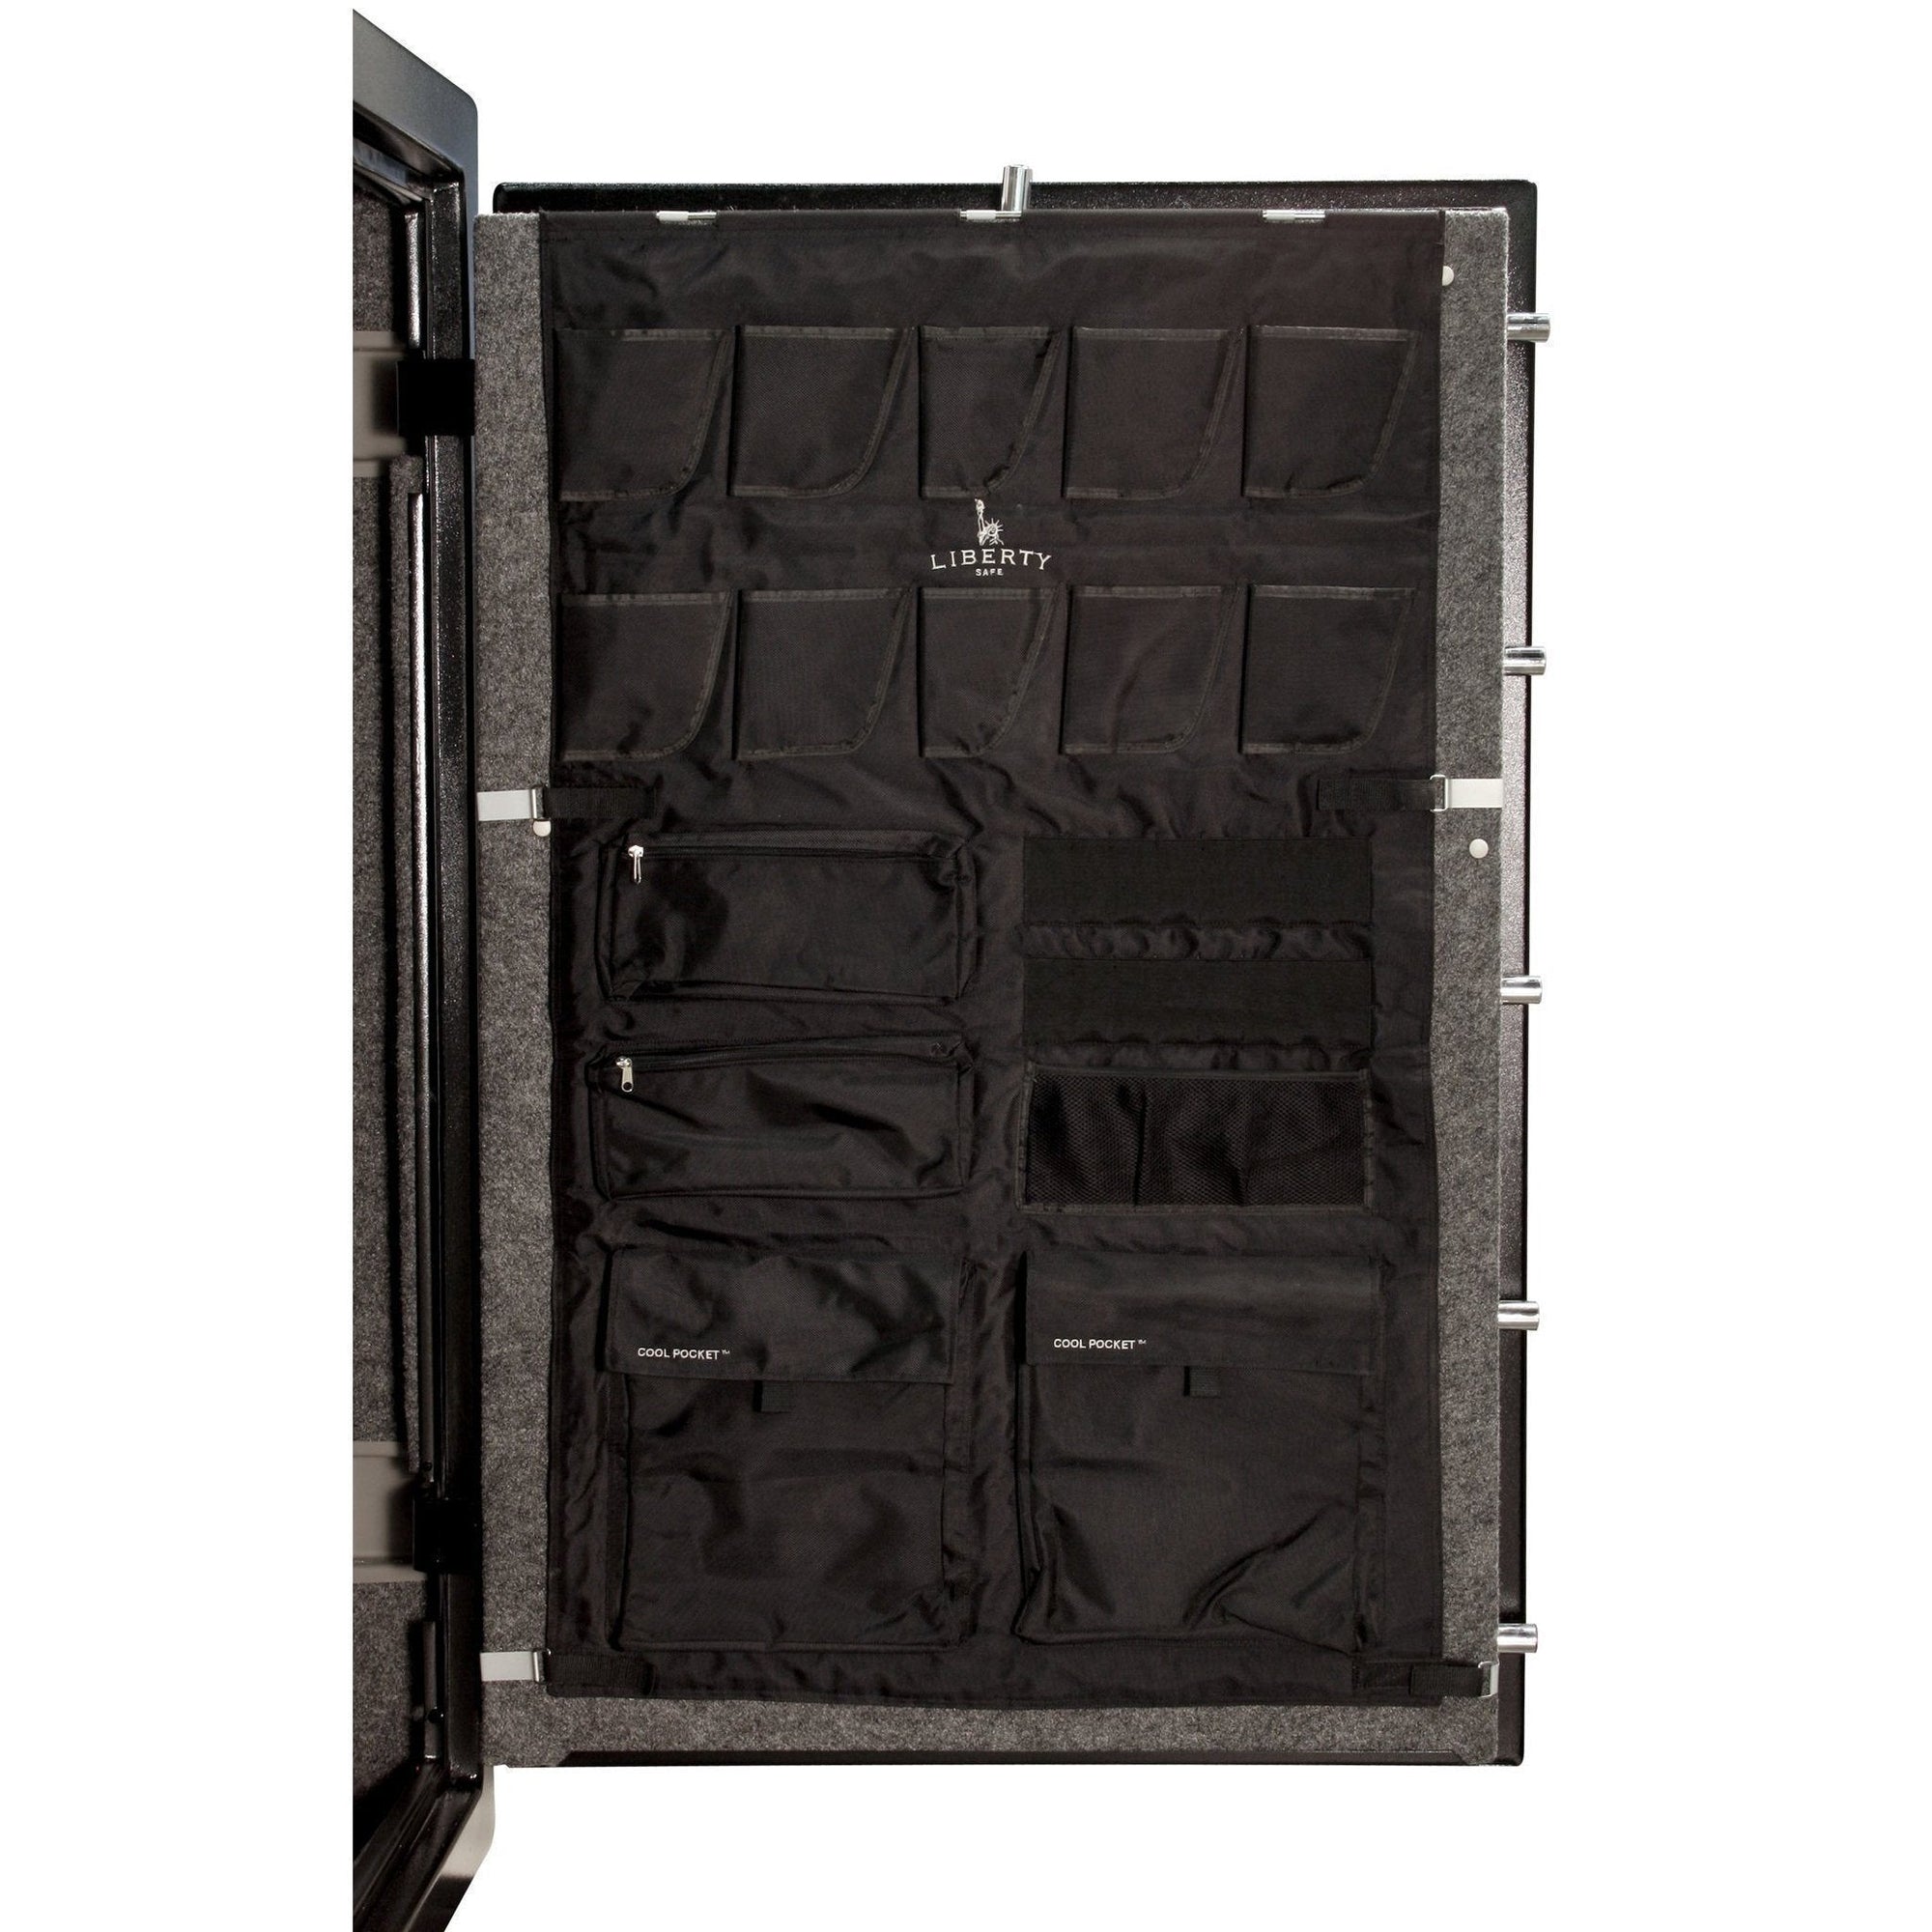 Accessory - storage - door panel - 48-64 size safes - MODLOCK